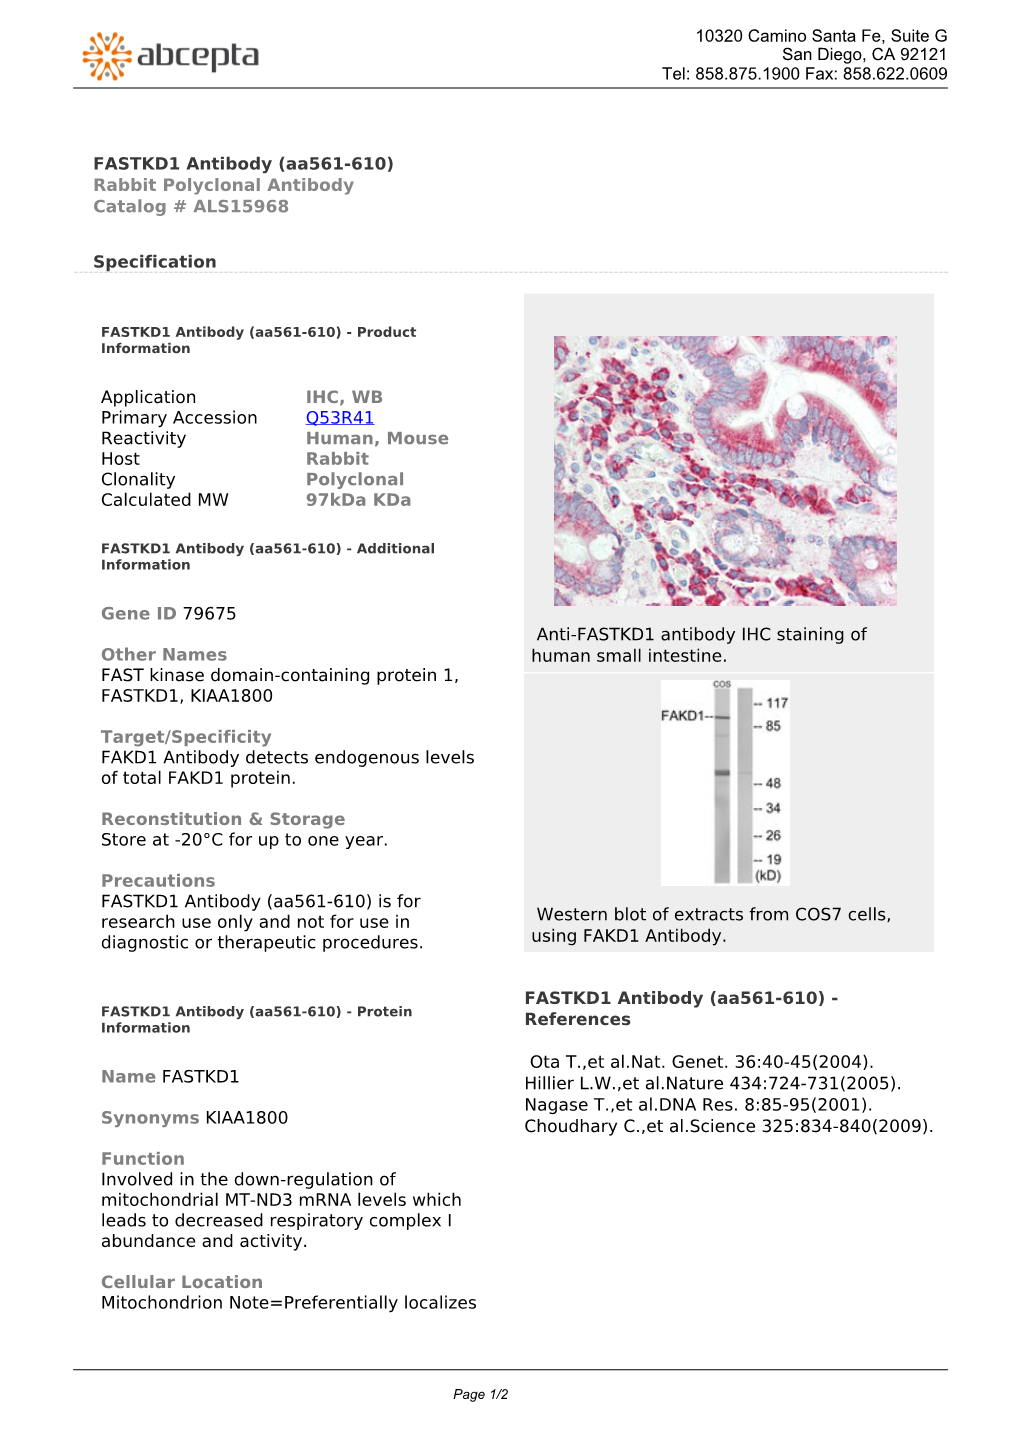 FASTKD1 Antibody (Aa561-610) Rabbit Polyclonal Antibody Catalog # ALS15968